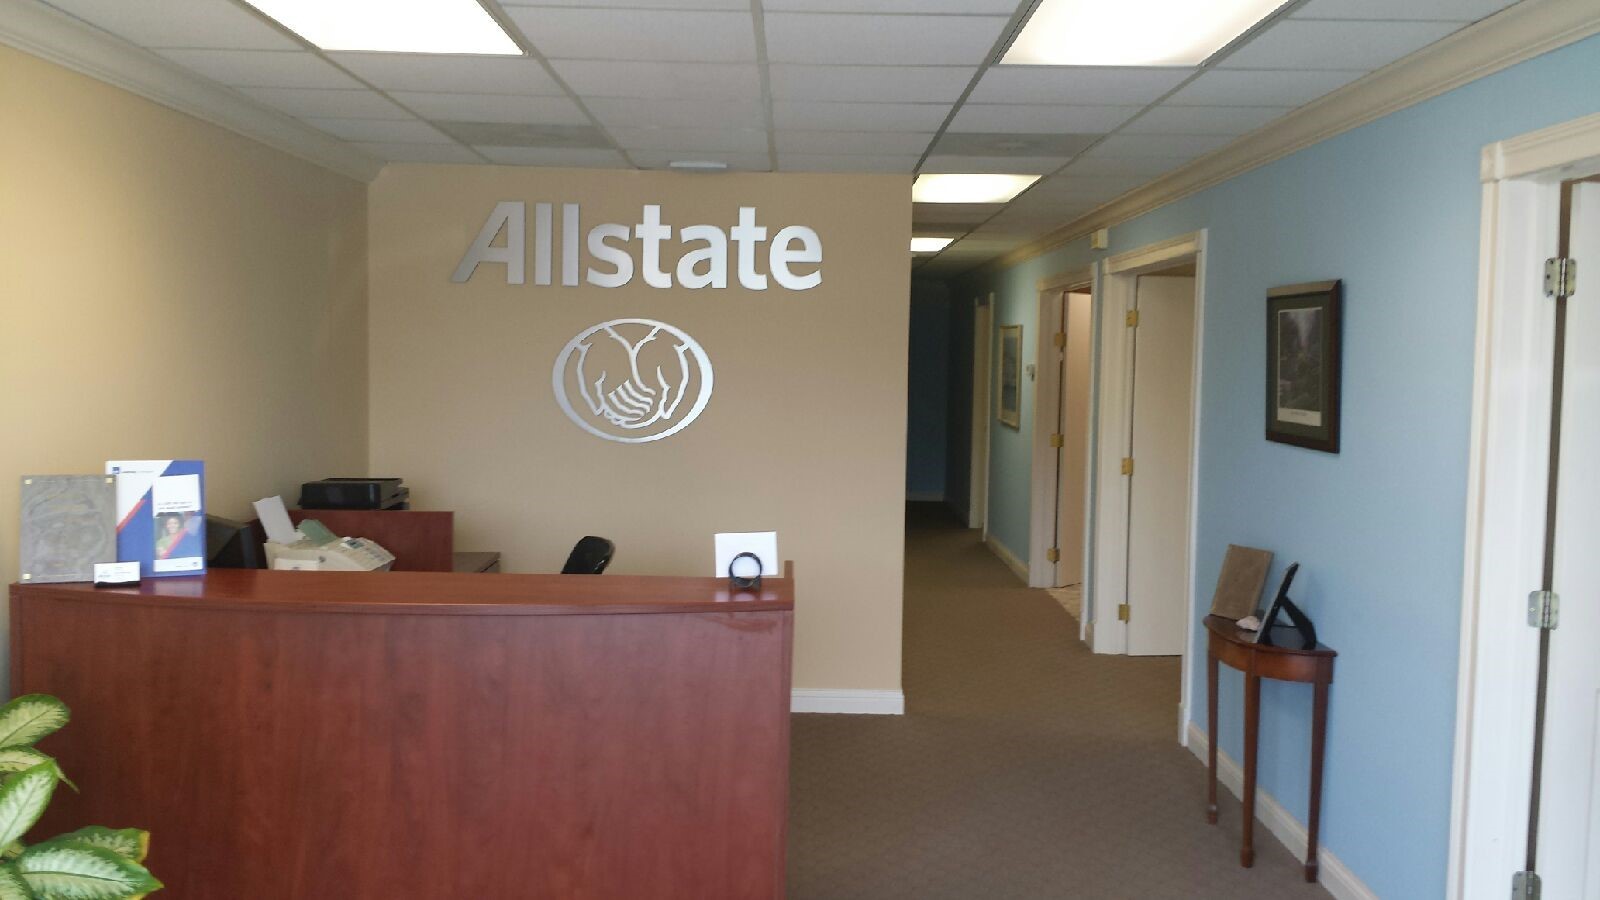 Image 4 | Sam Tanoos: Allstate Insurance